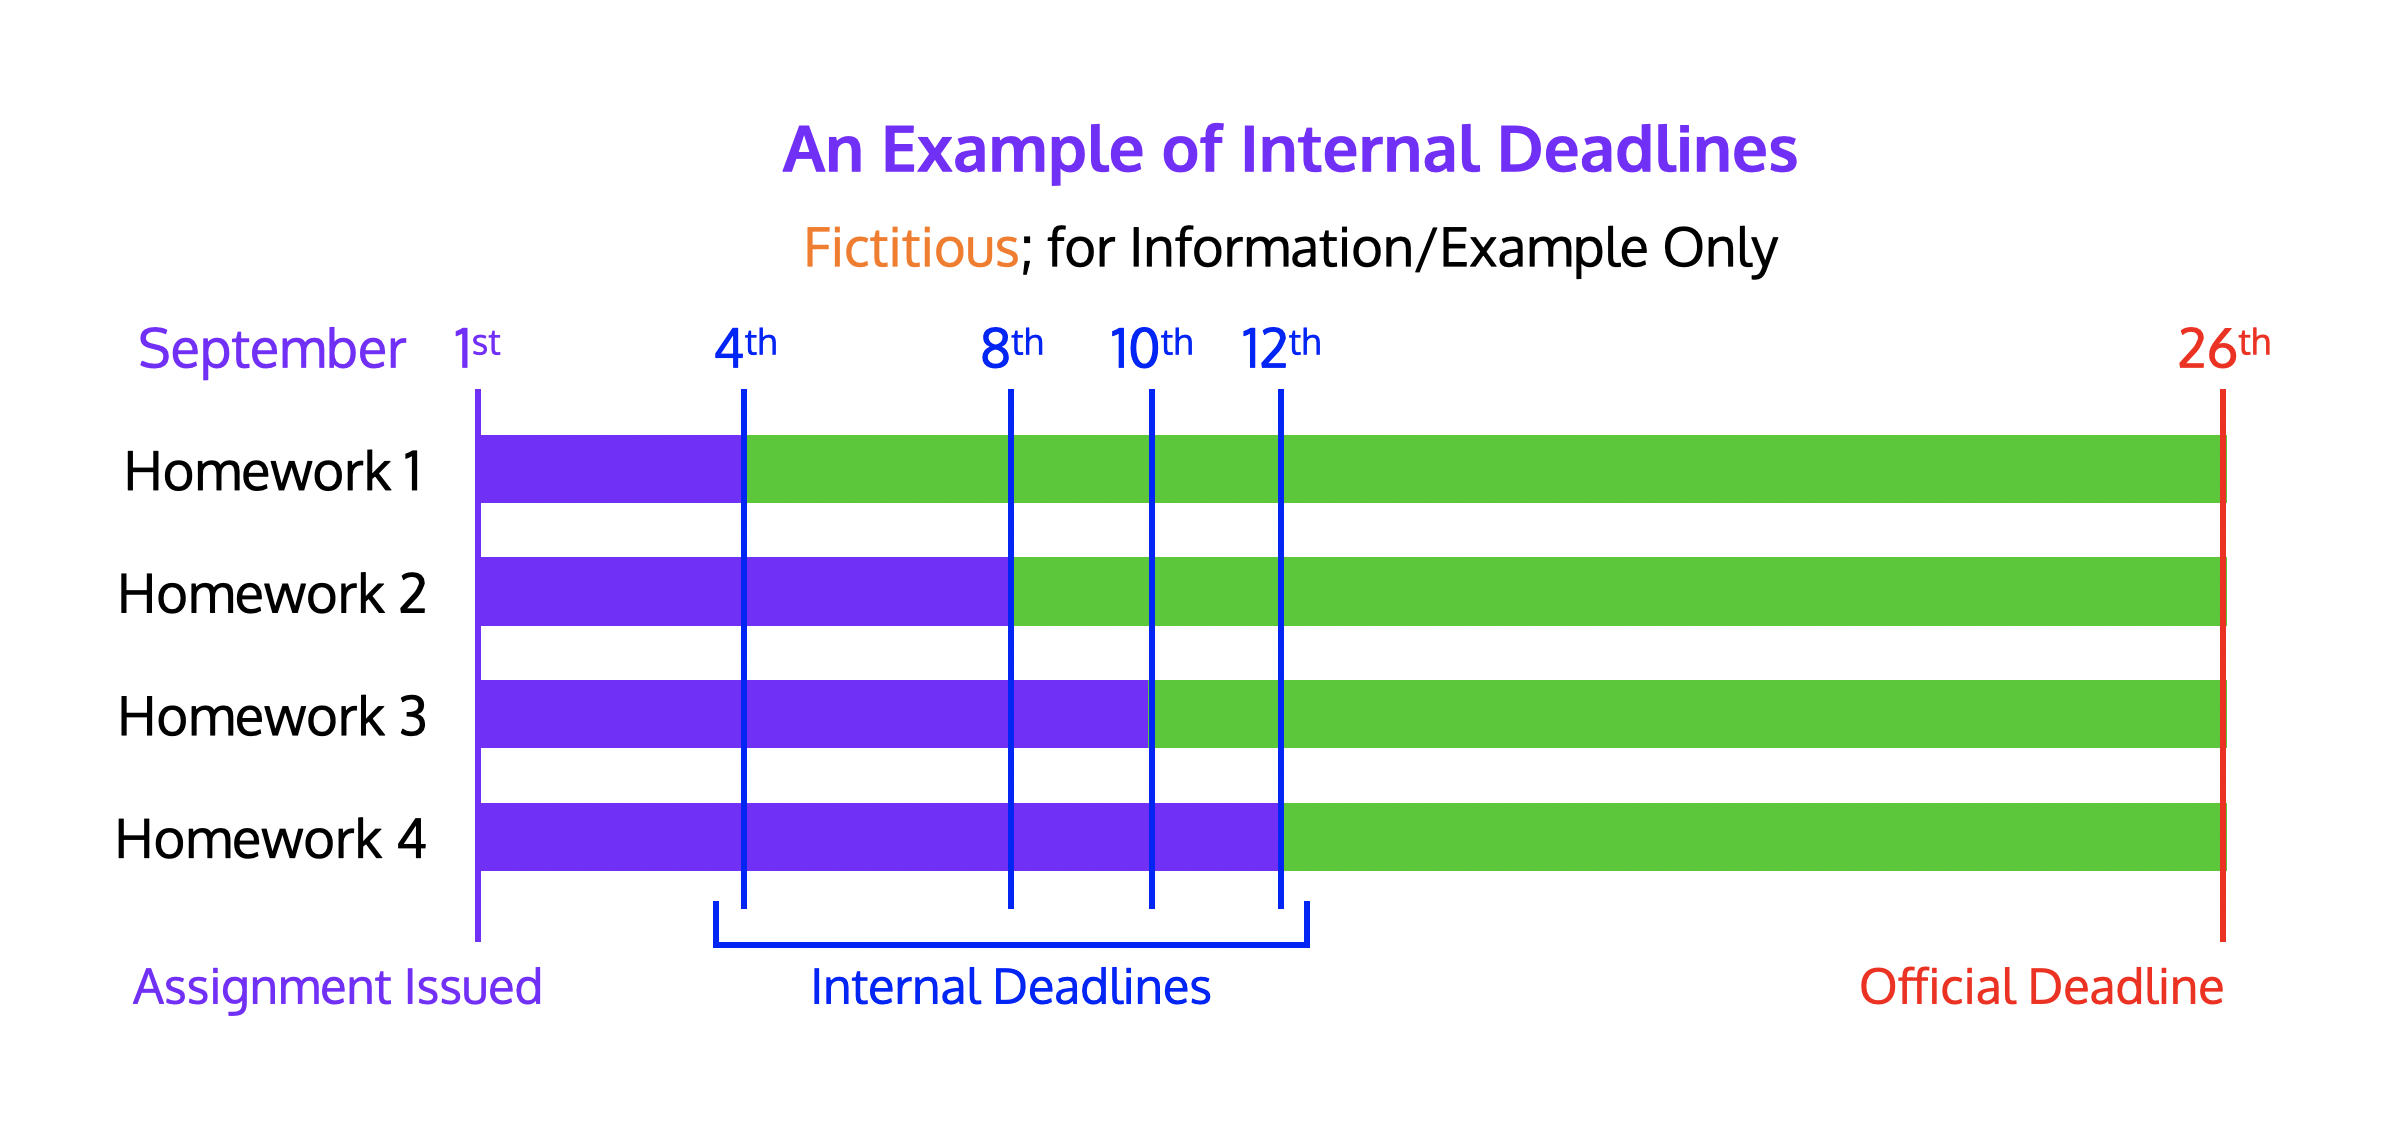 An Example of Internal Deadlines